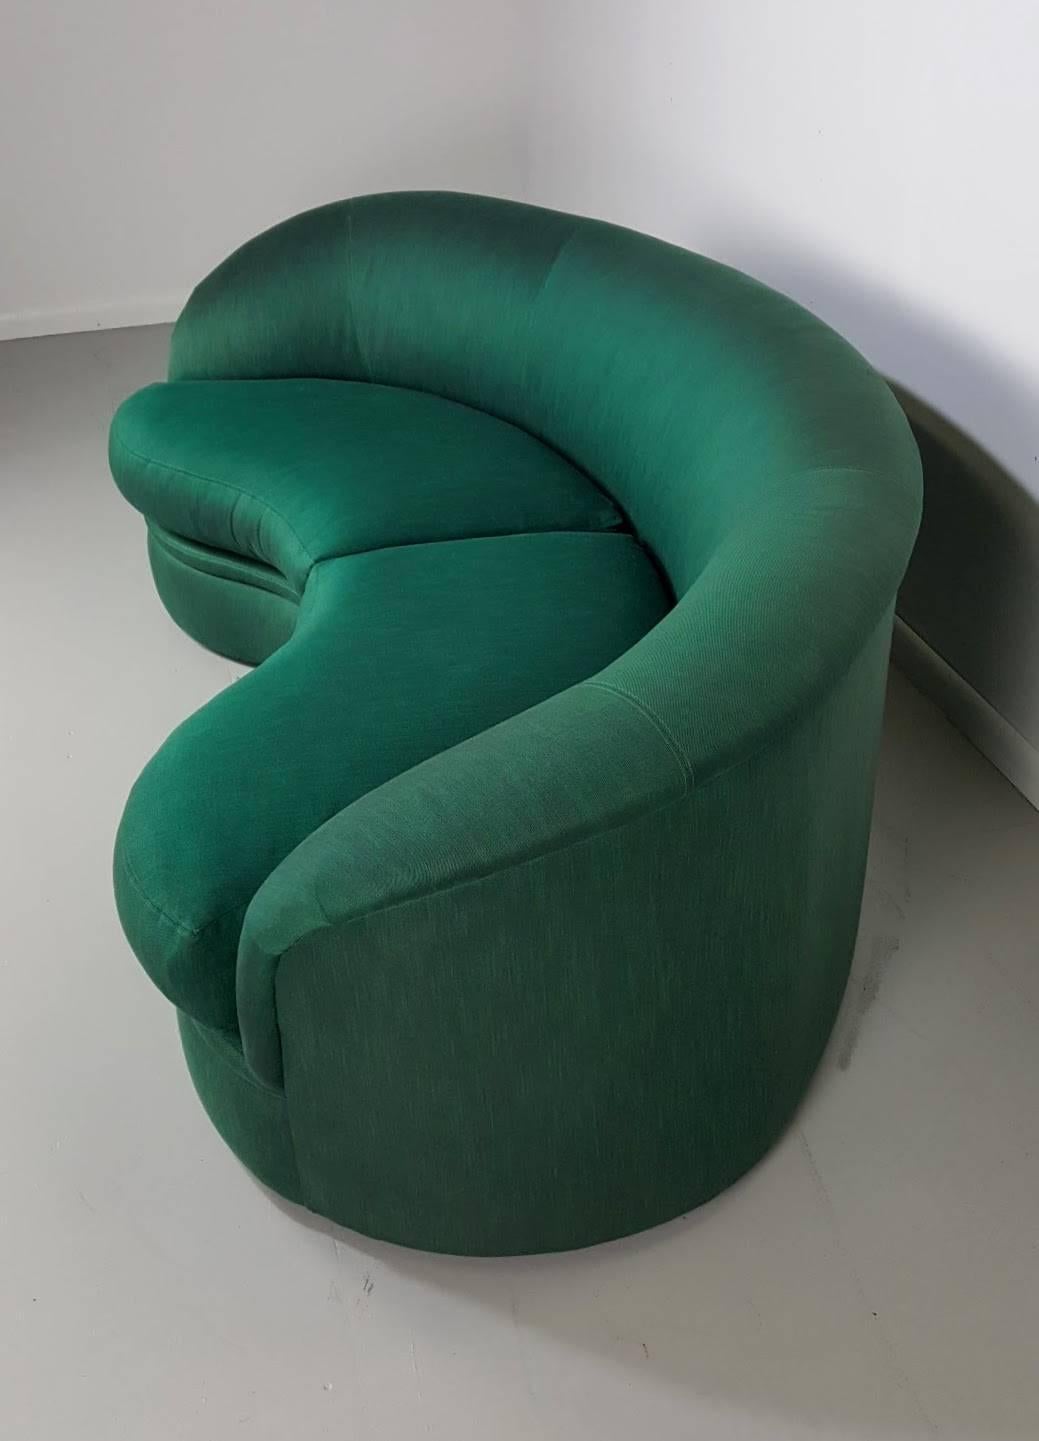 American Vladimir Kagan Sofa, Biomorphic Kidney Form for Directional Furniture, 1980s